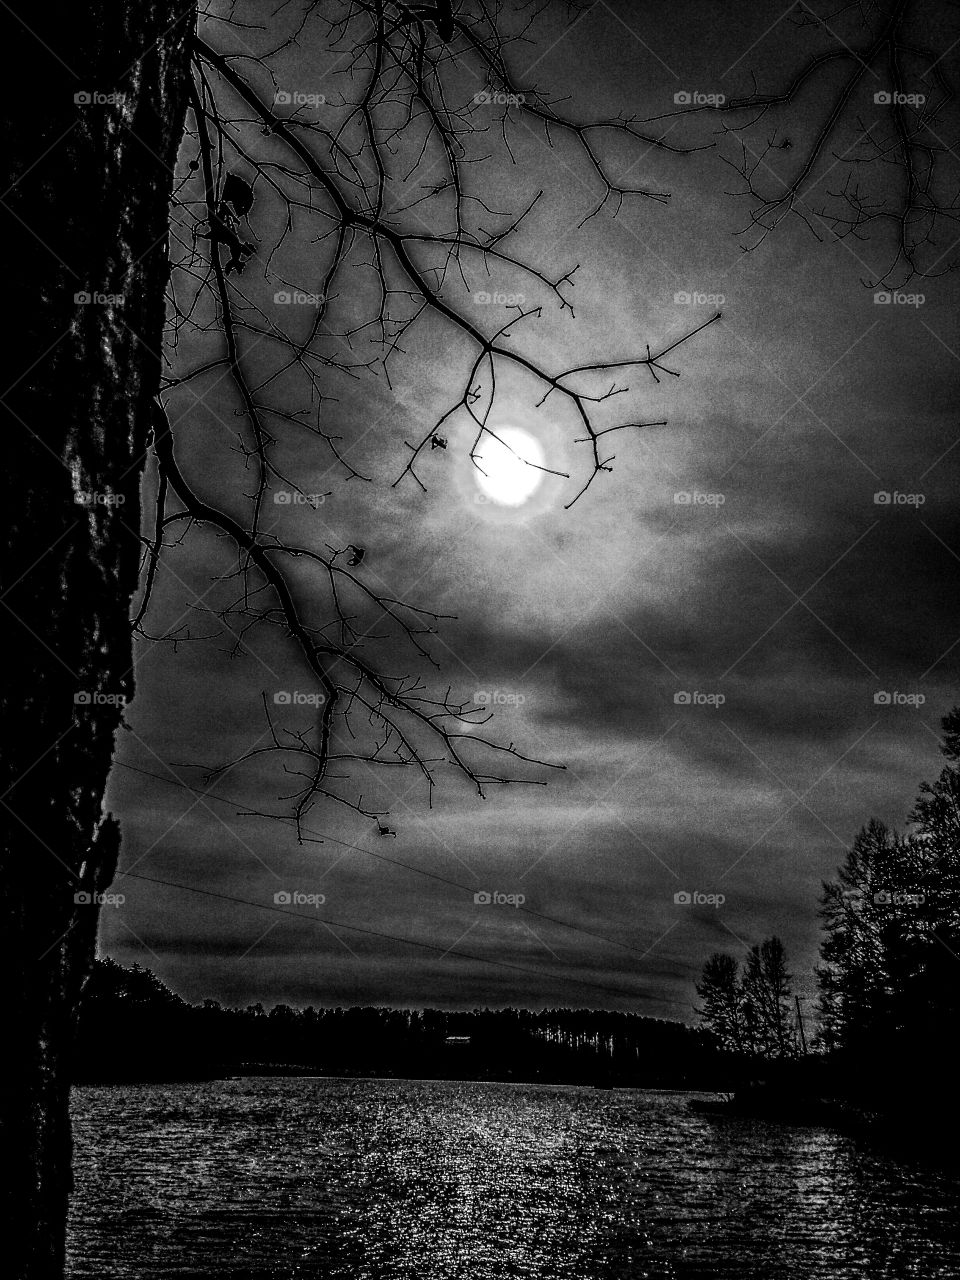 Lake by night